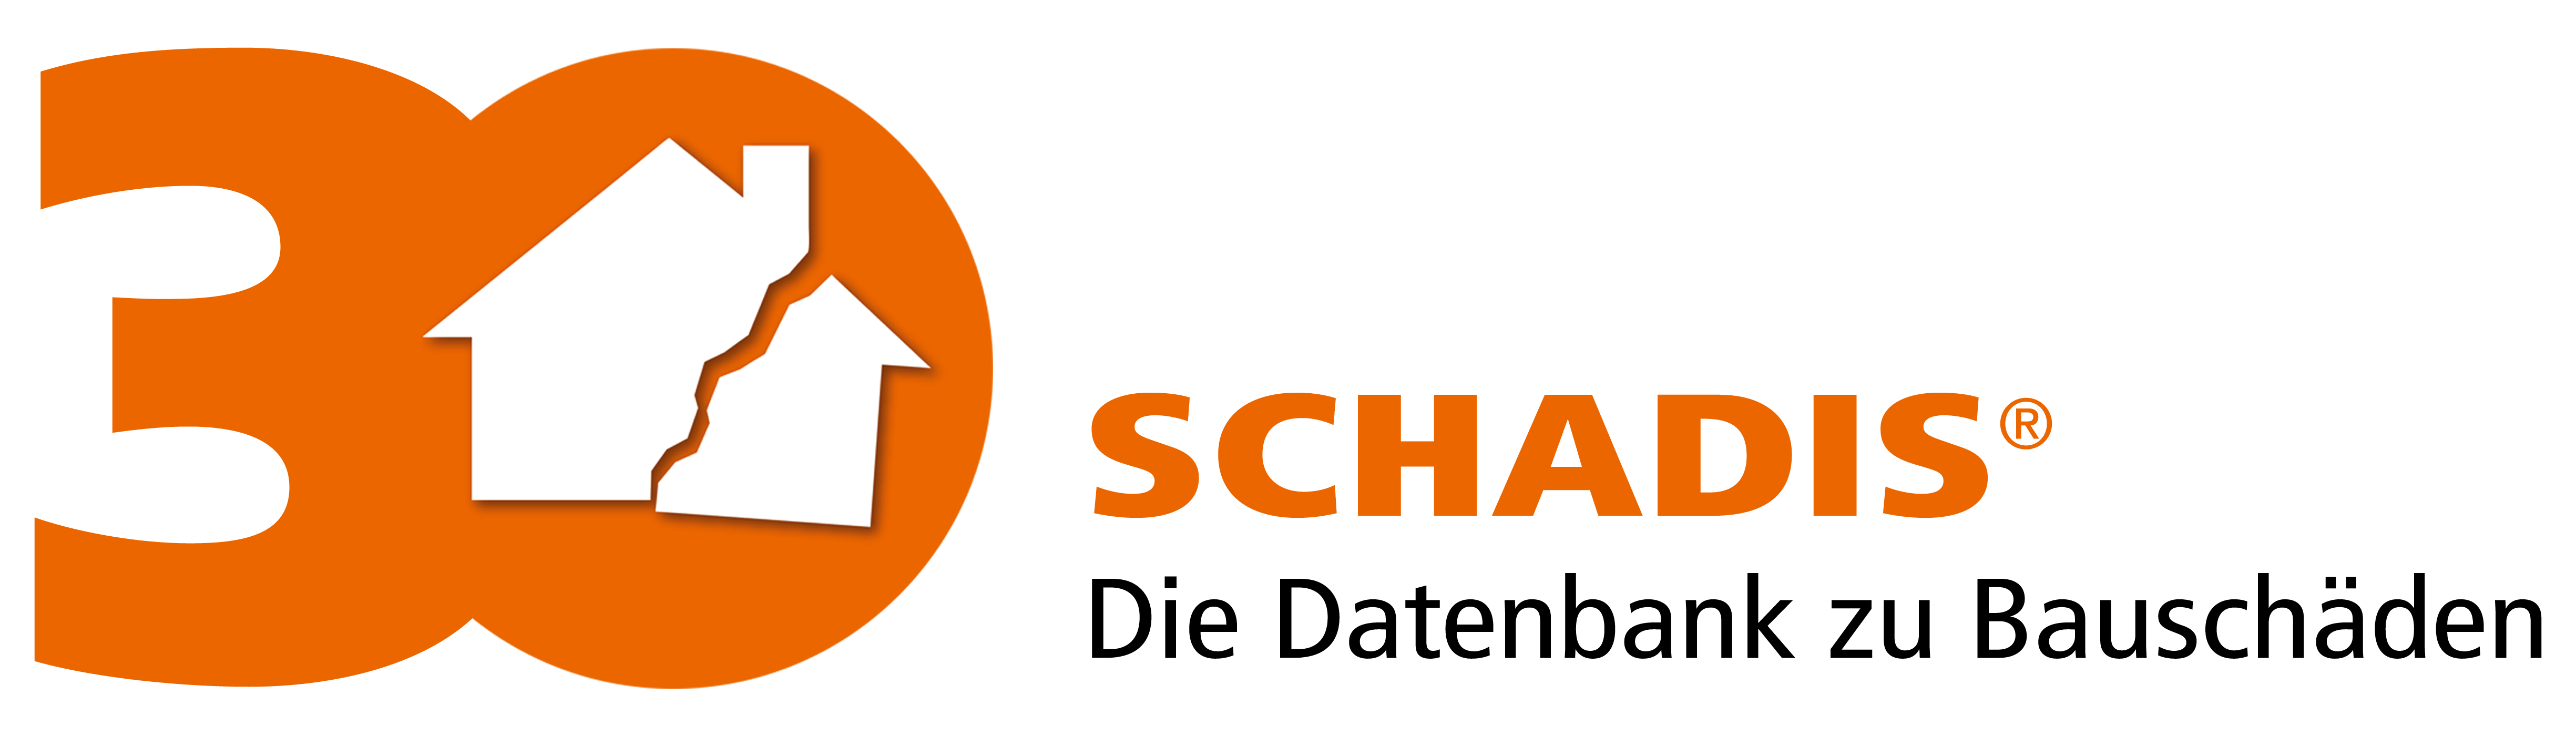 Schadis Logo